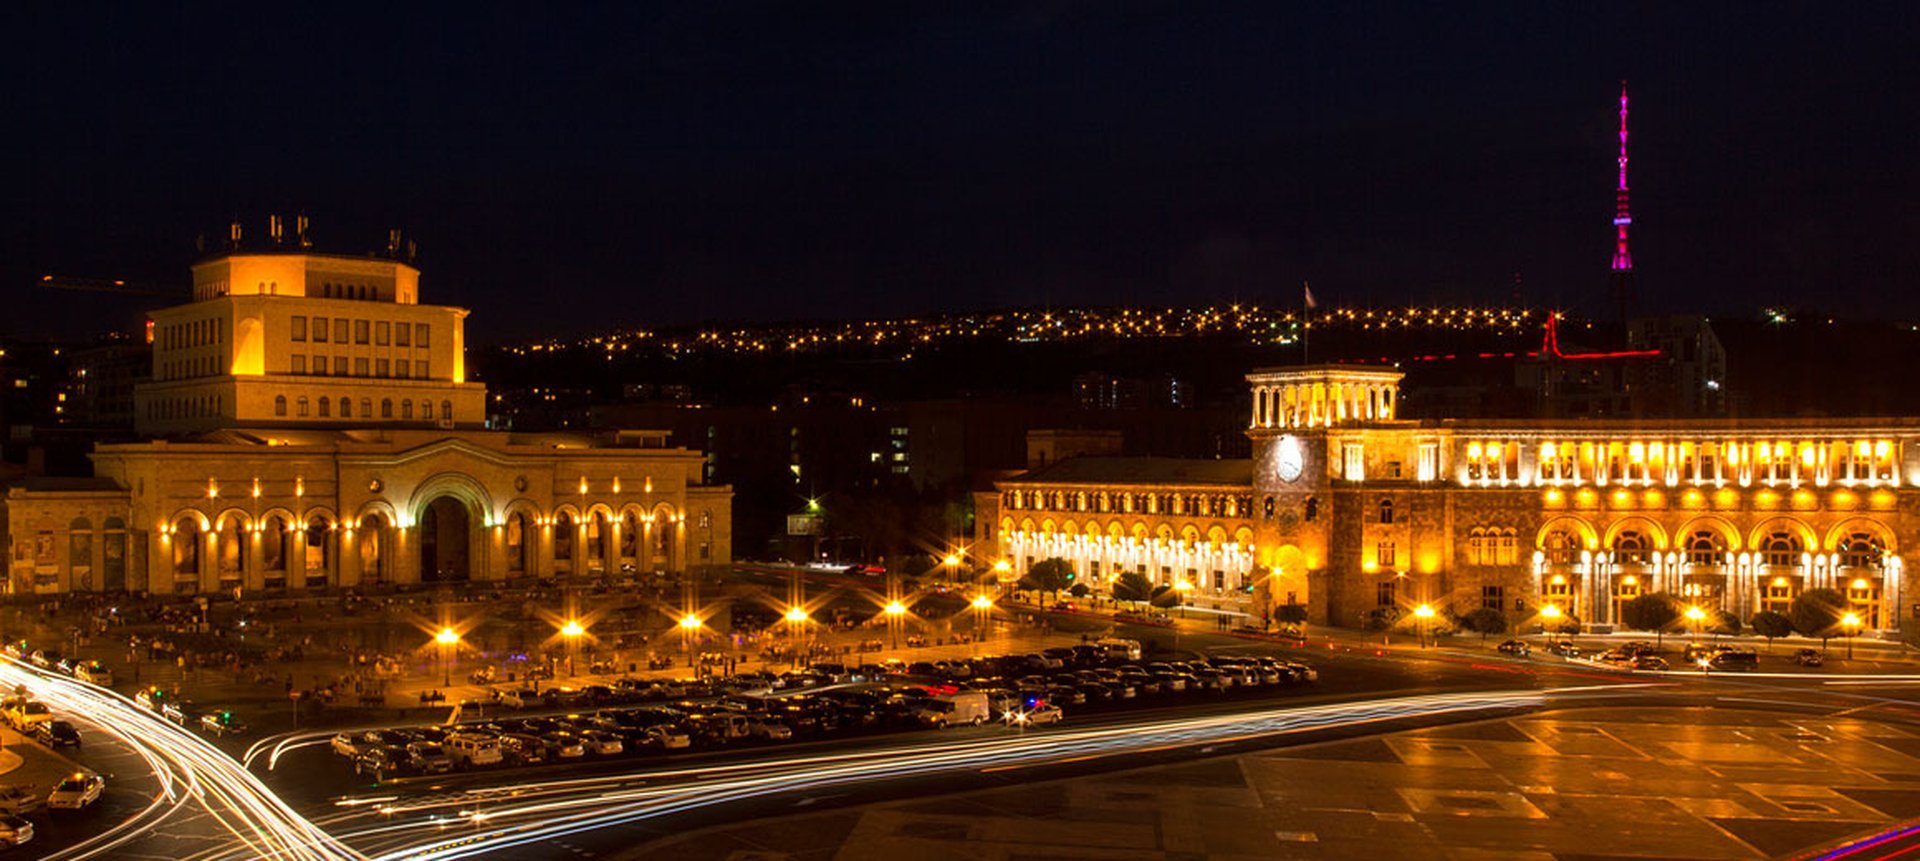 Анапа ереван. Площадь Республики Ереван. Ночной Ереван площадь. Площадь Республики Ереван ночью. Центральная площадь Еревана ночью.